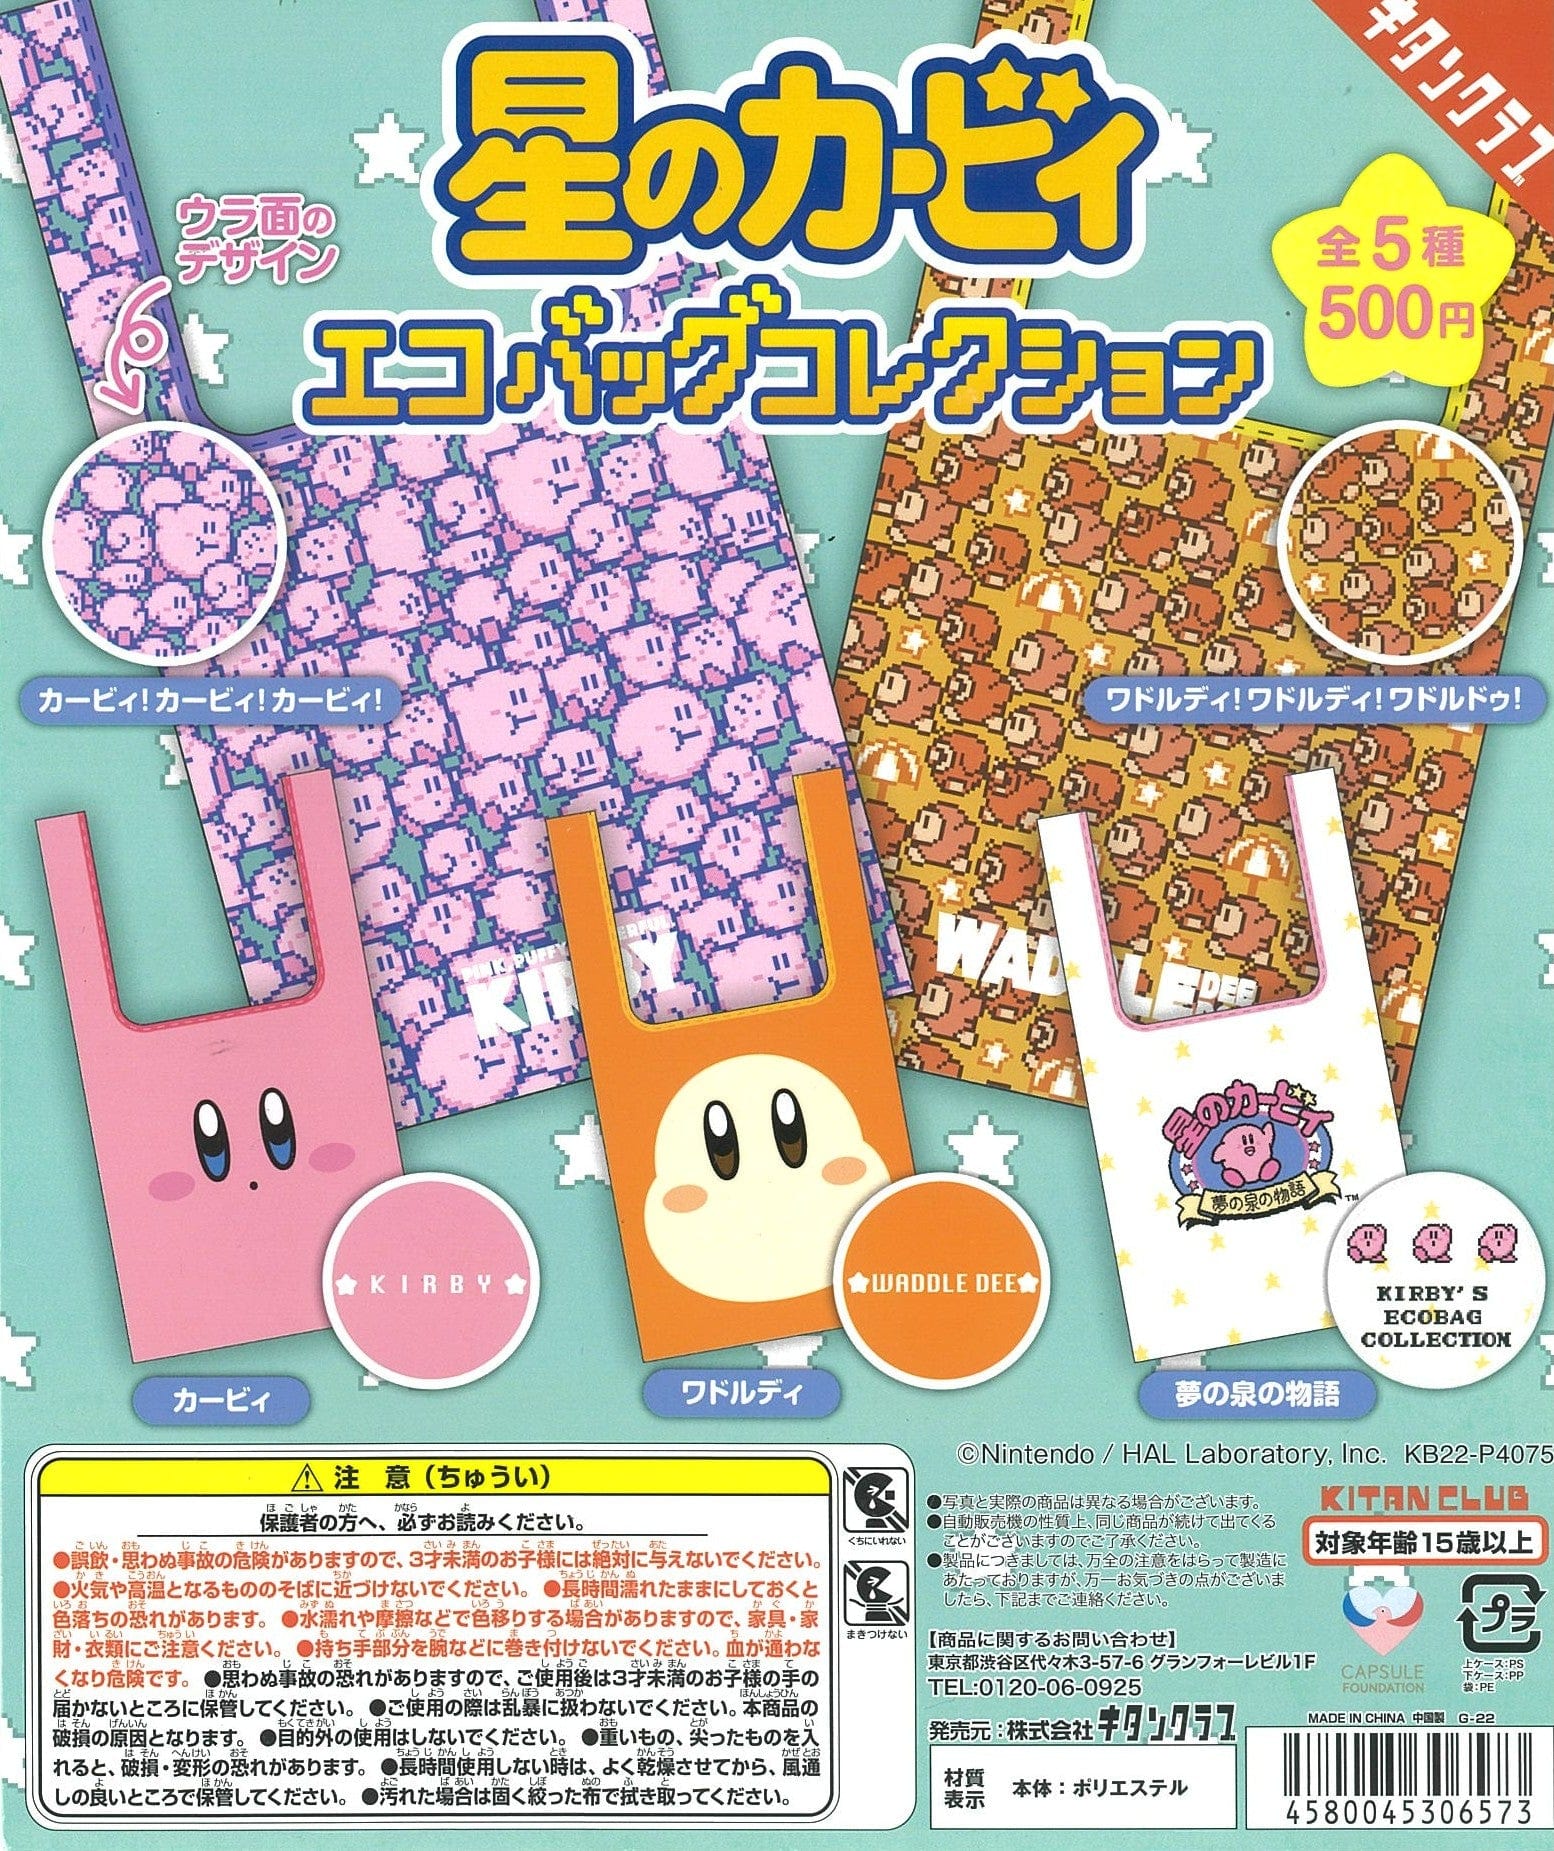 Kitan Club CP1890 Kirby's Dream Land Eco Bag Collection